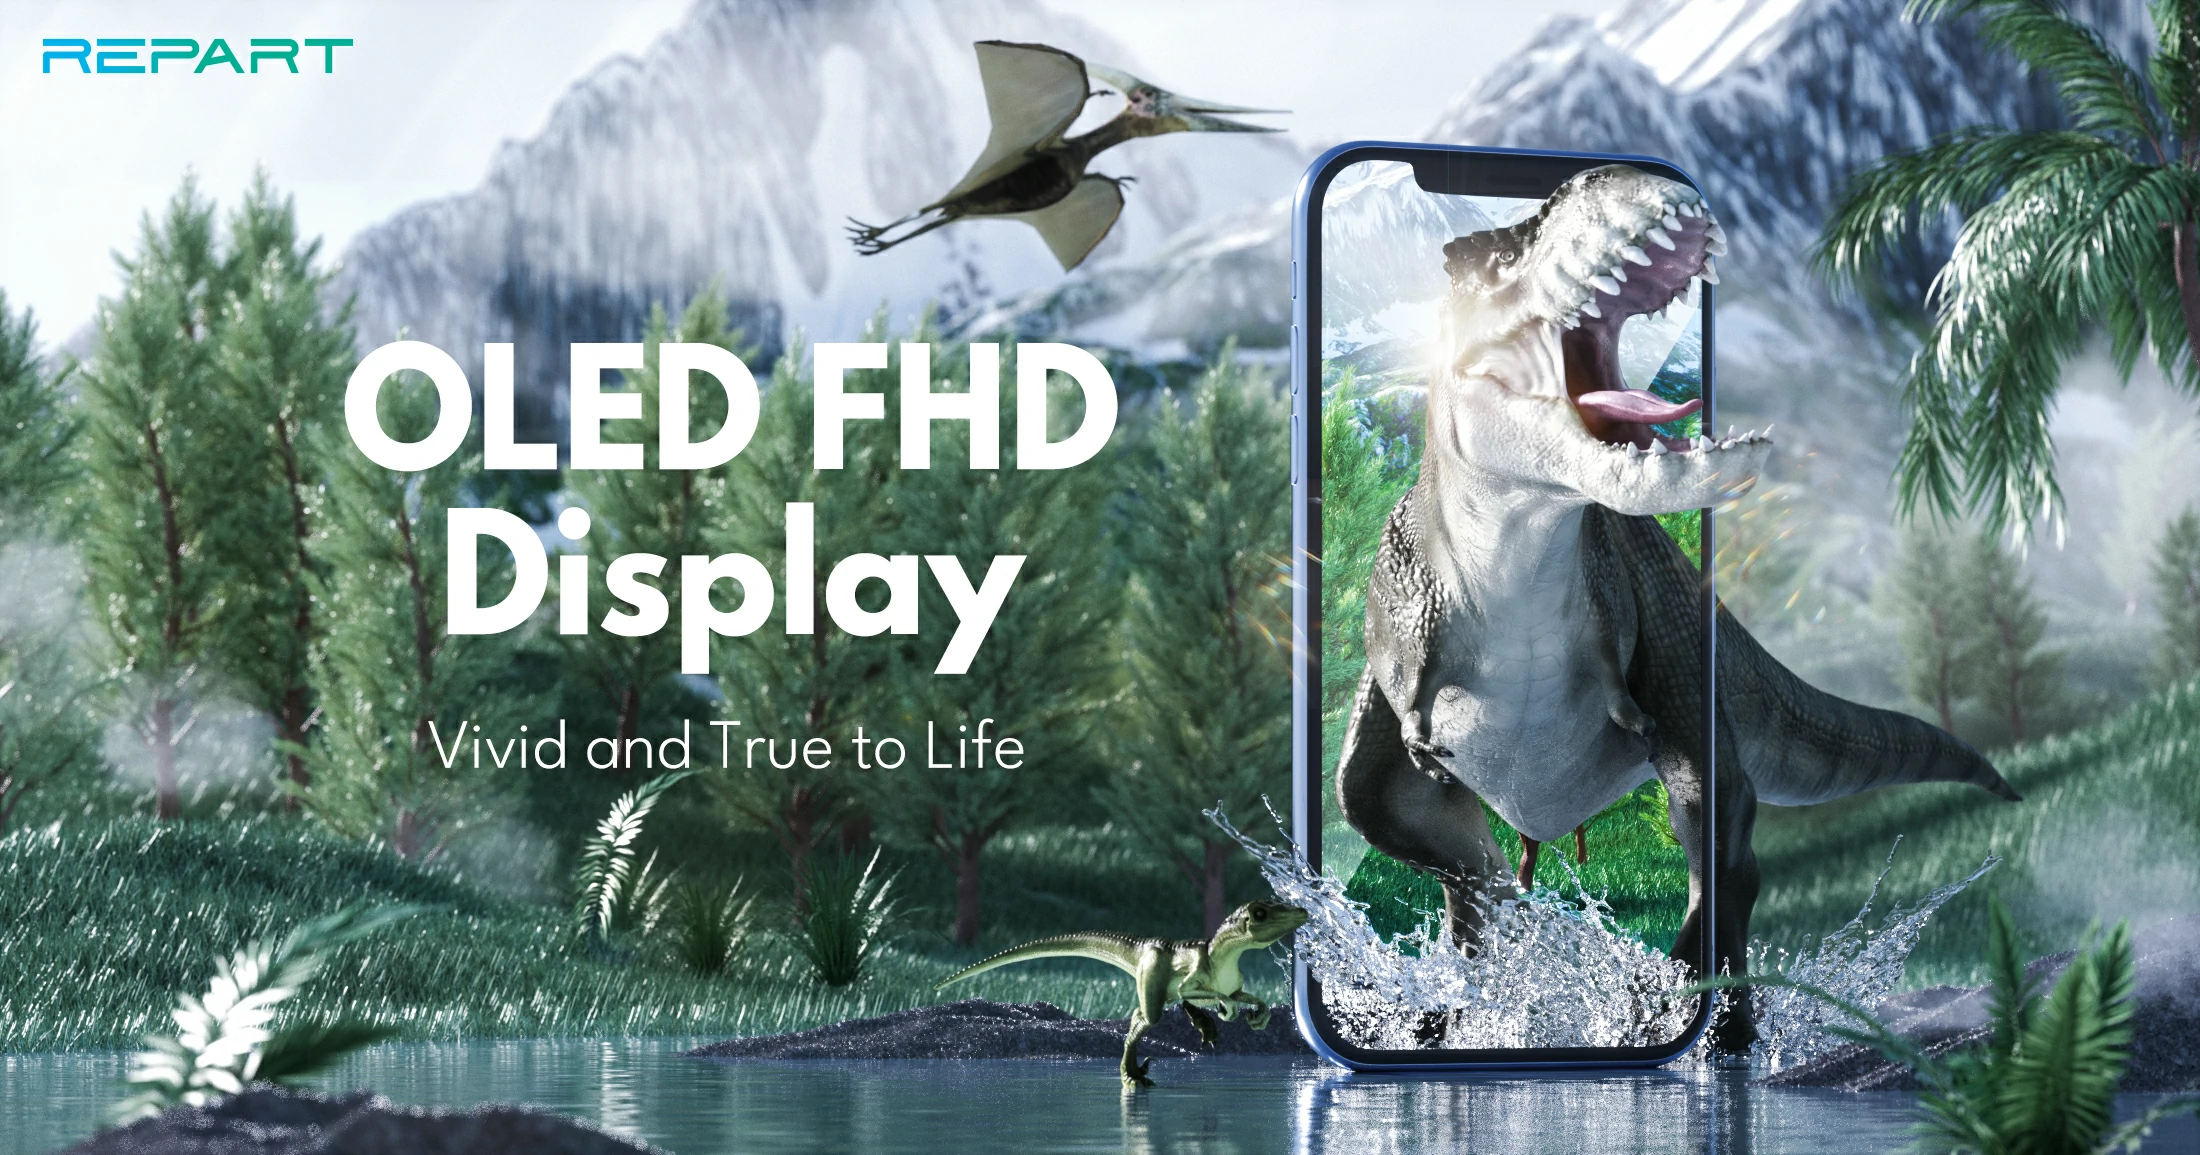 OLED FHD Display